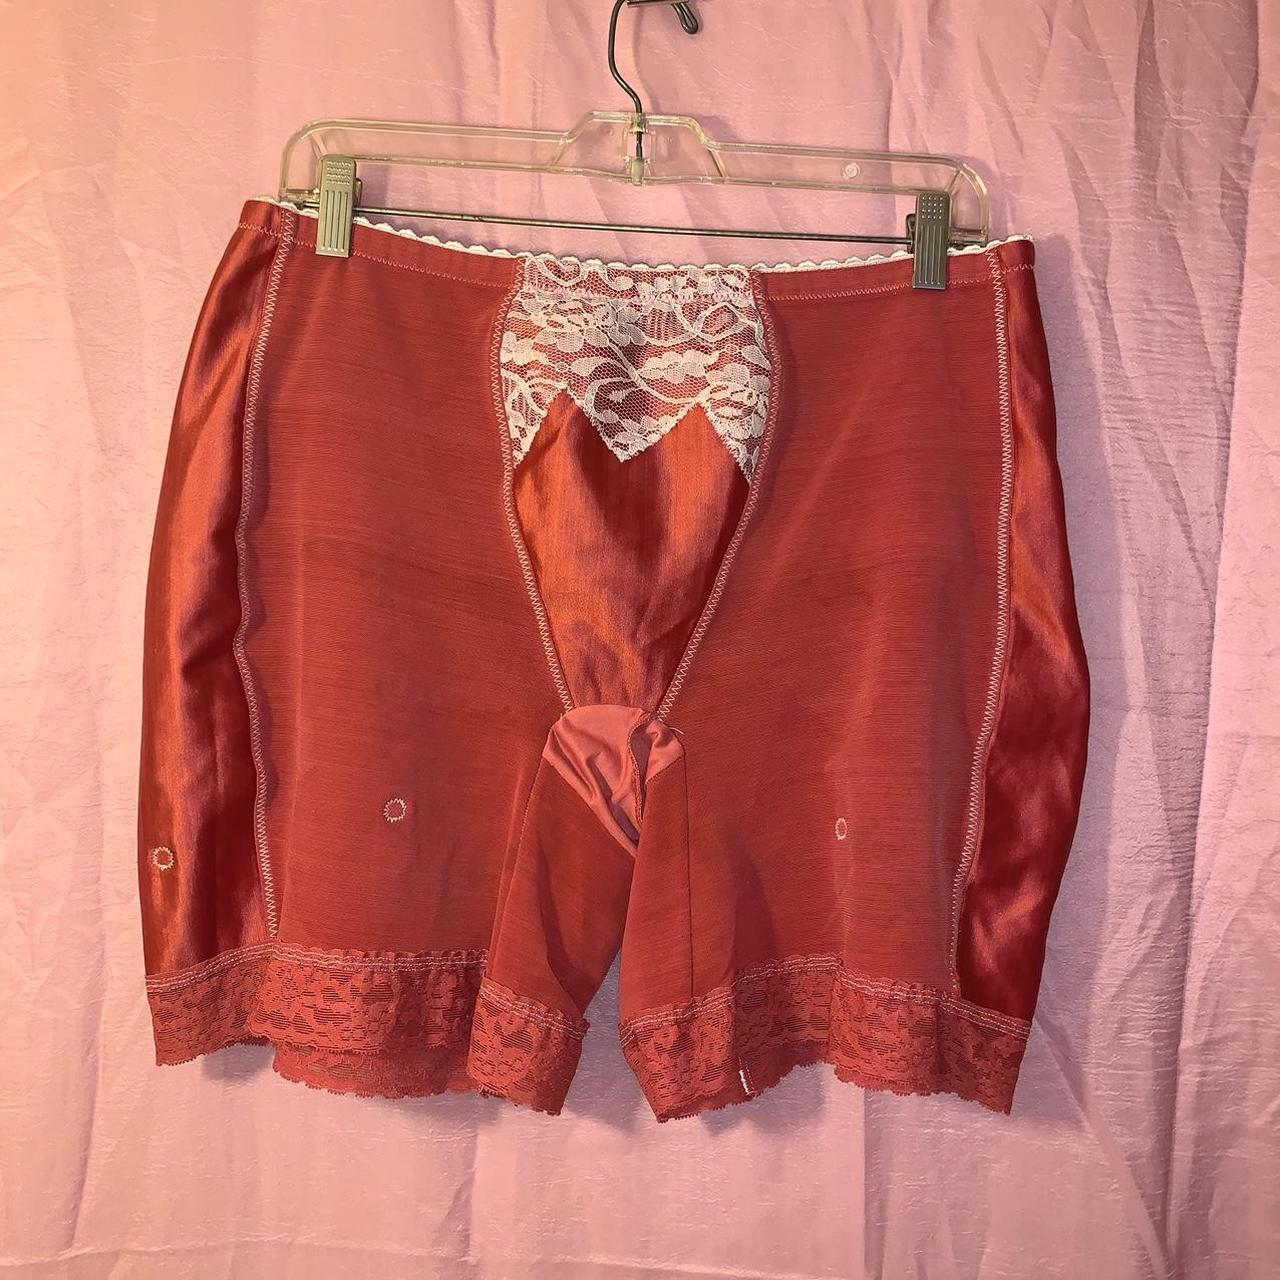 Women’s White and Red Lingerie Biker Shorts